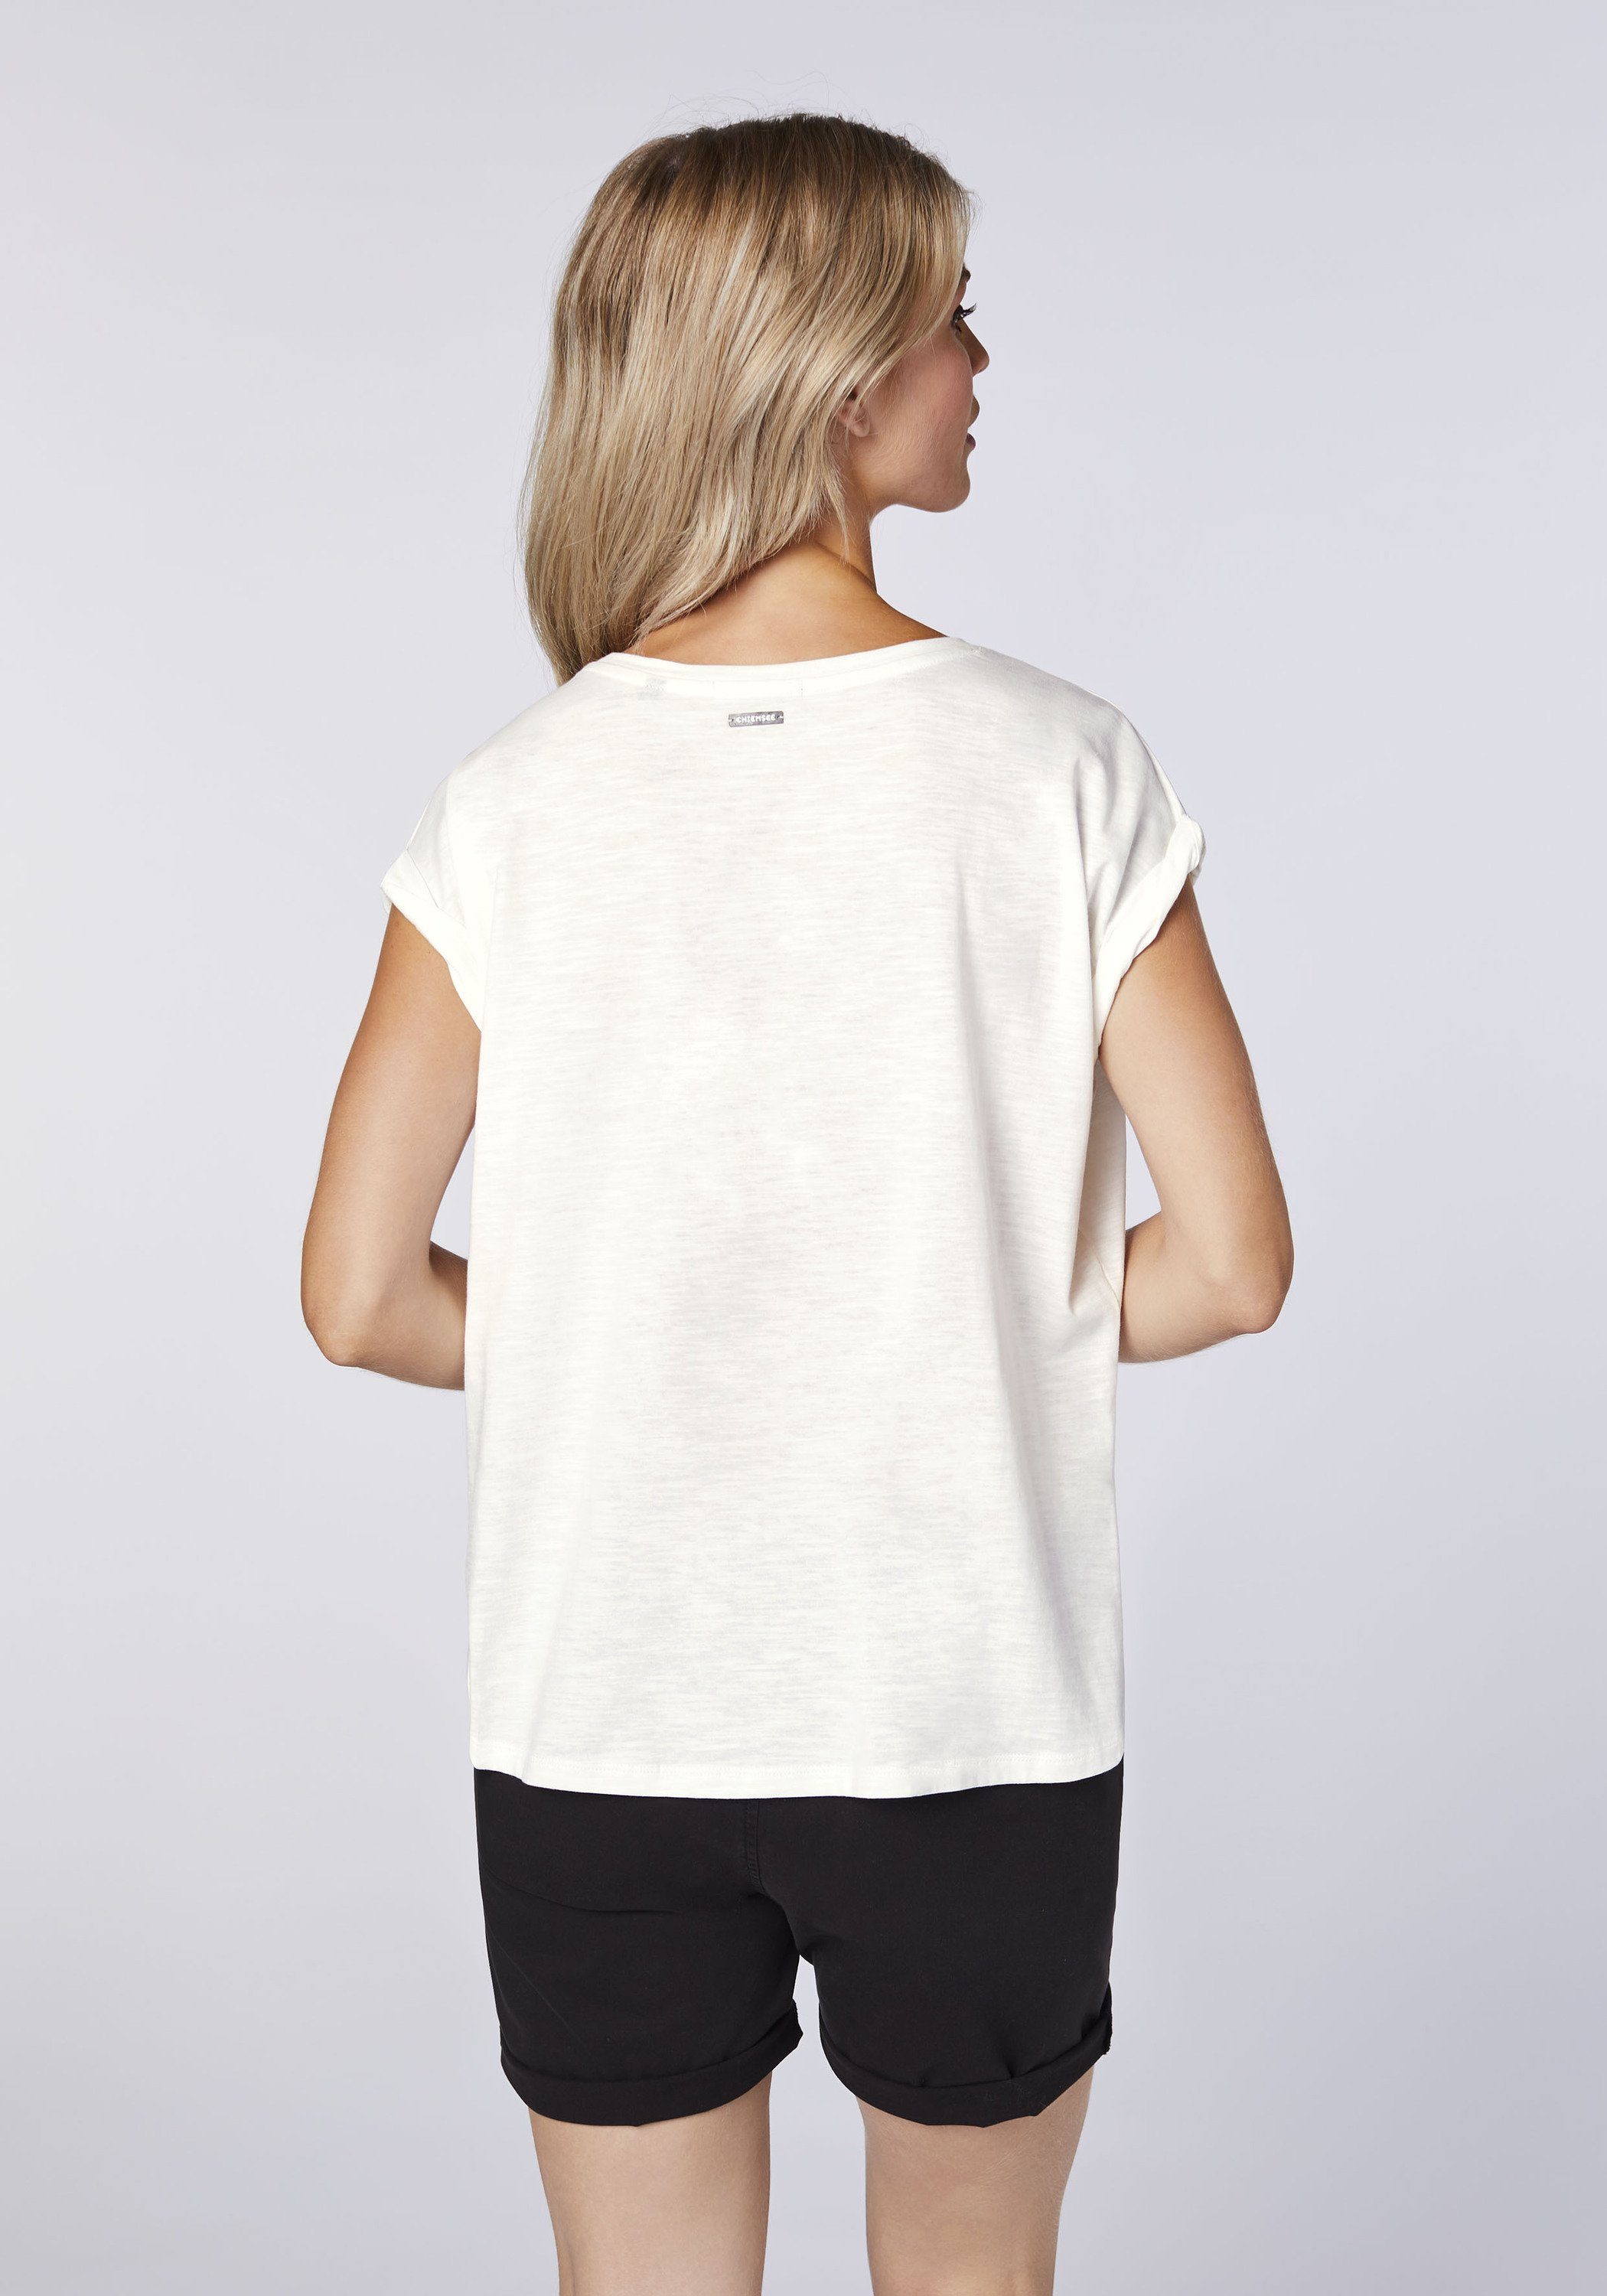 Frontprint Chiemsee 1 Blue White/Med mehrfarbigem T-Shirt mit Print-Shirt